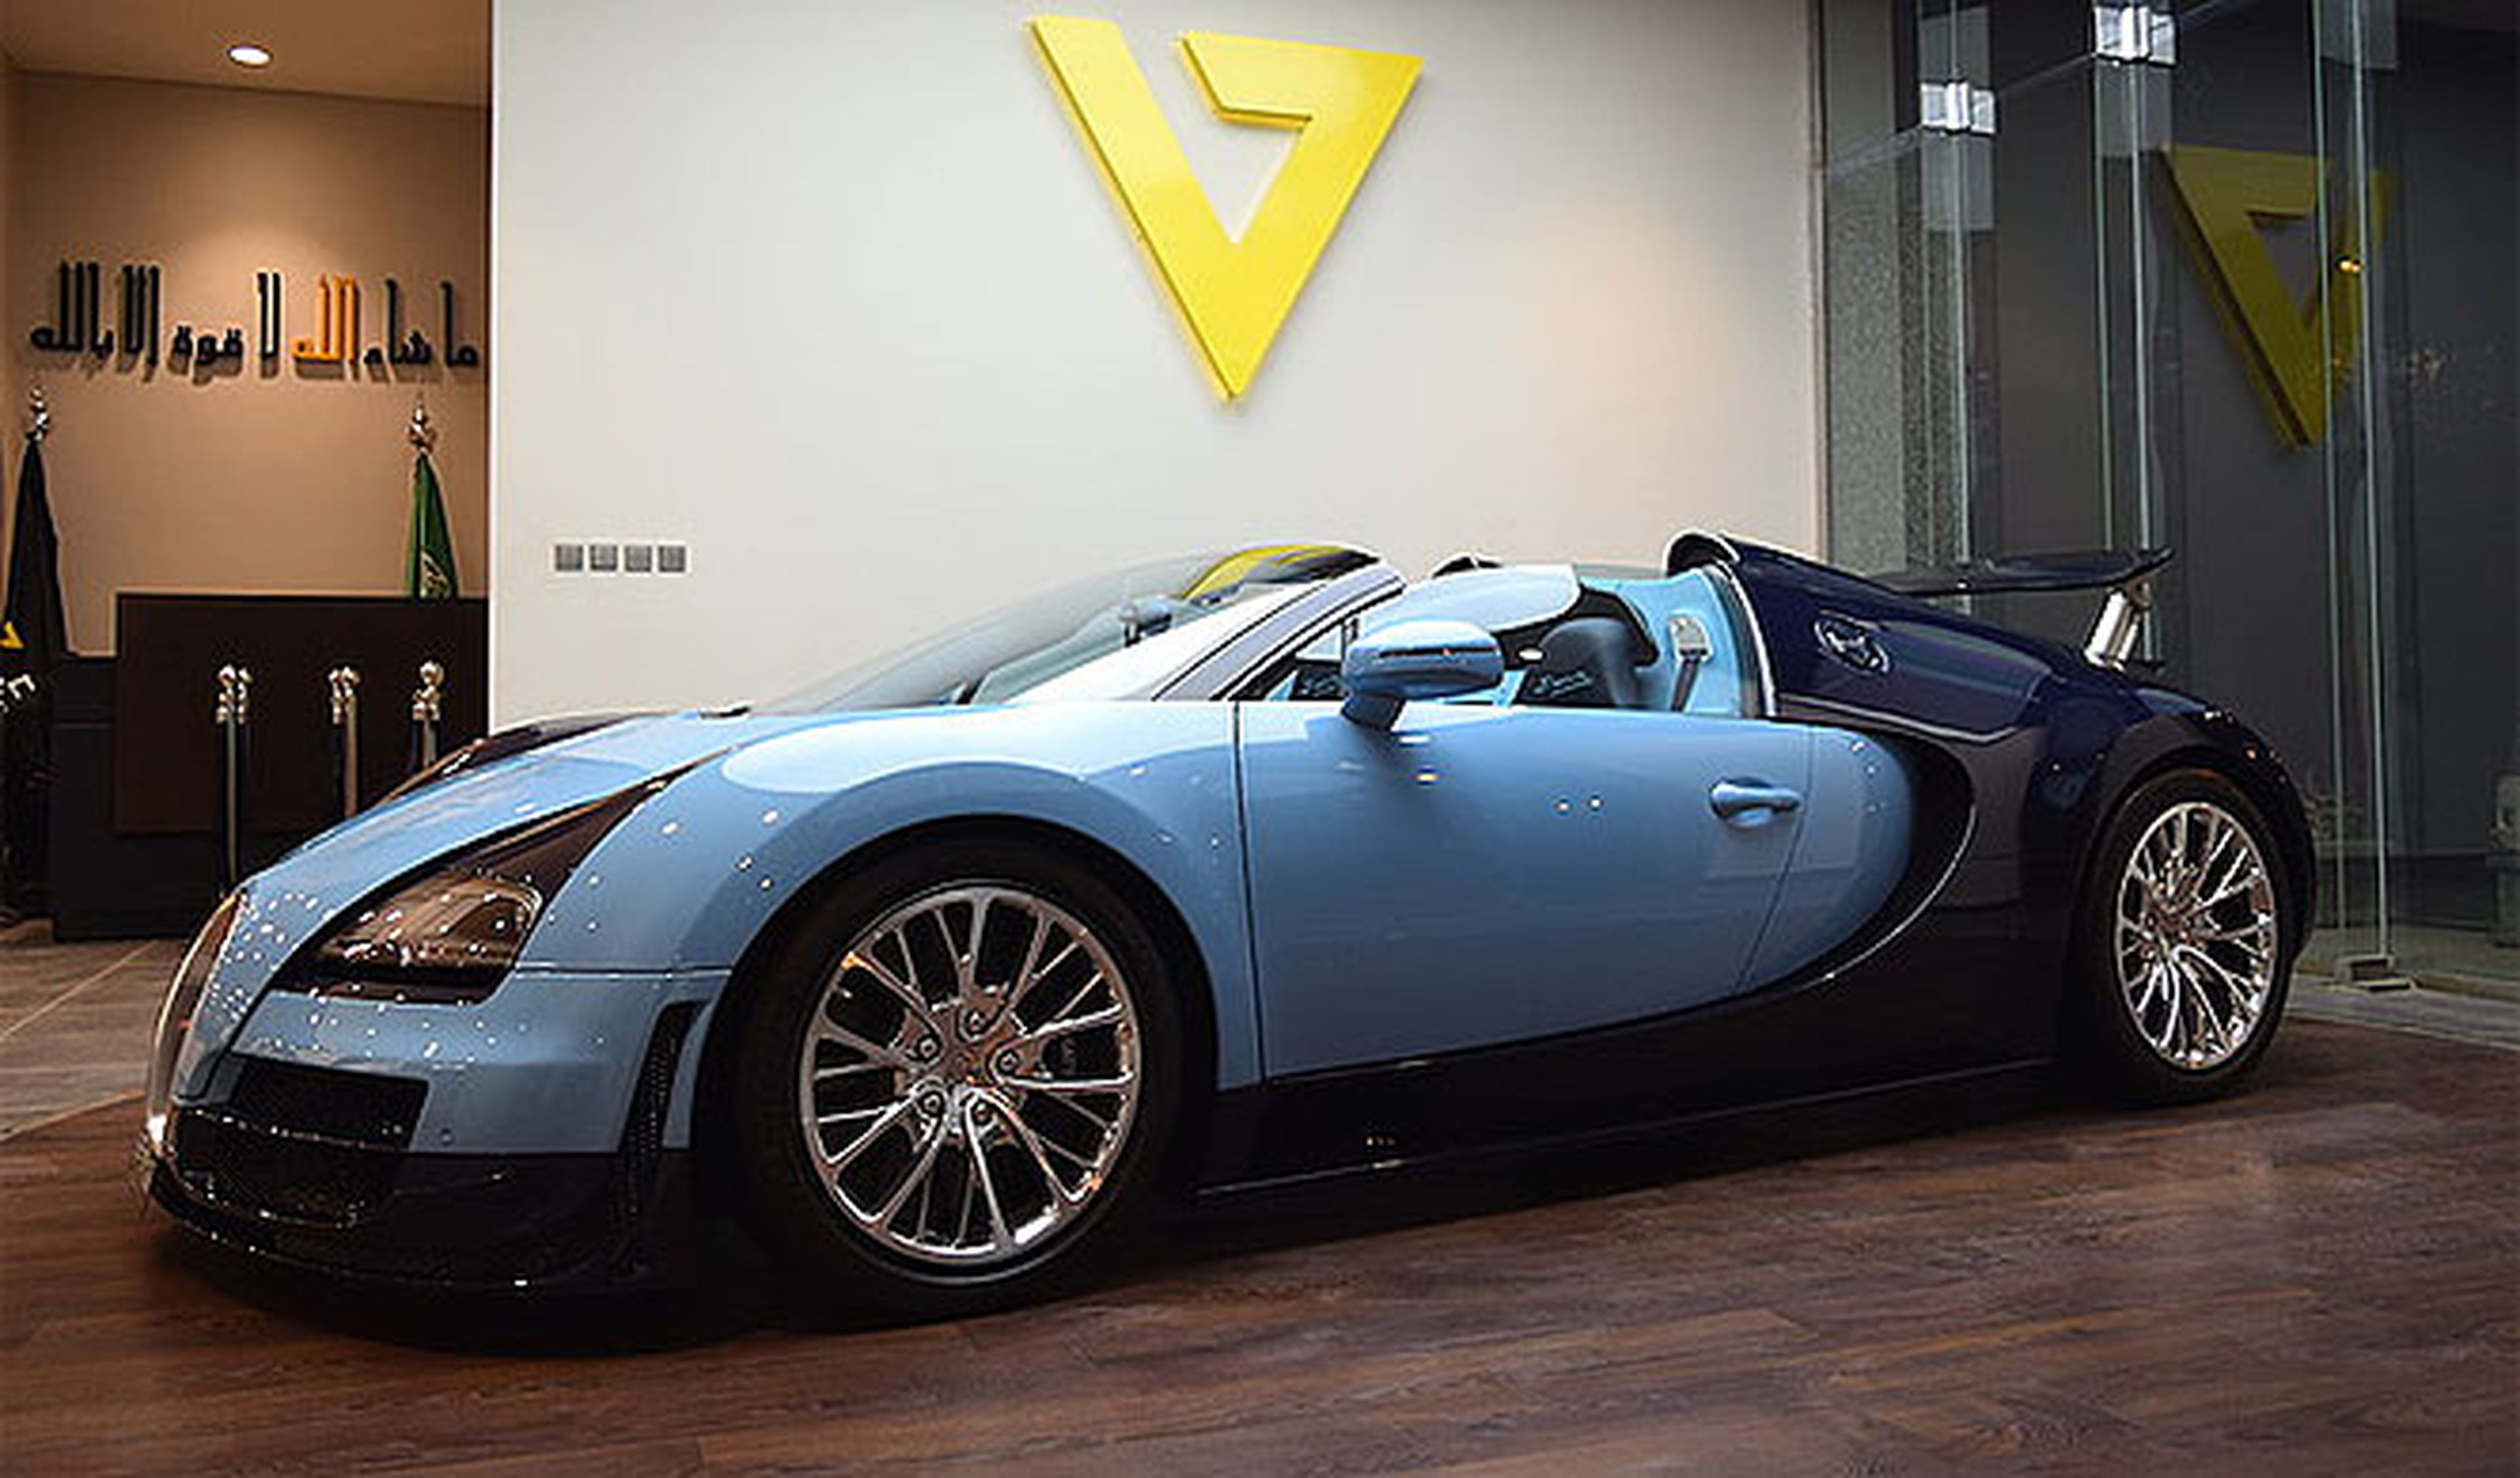 Arabia Saudí, único destino para este Bugatti Veyron